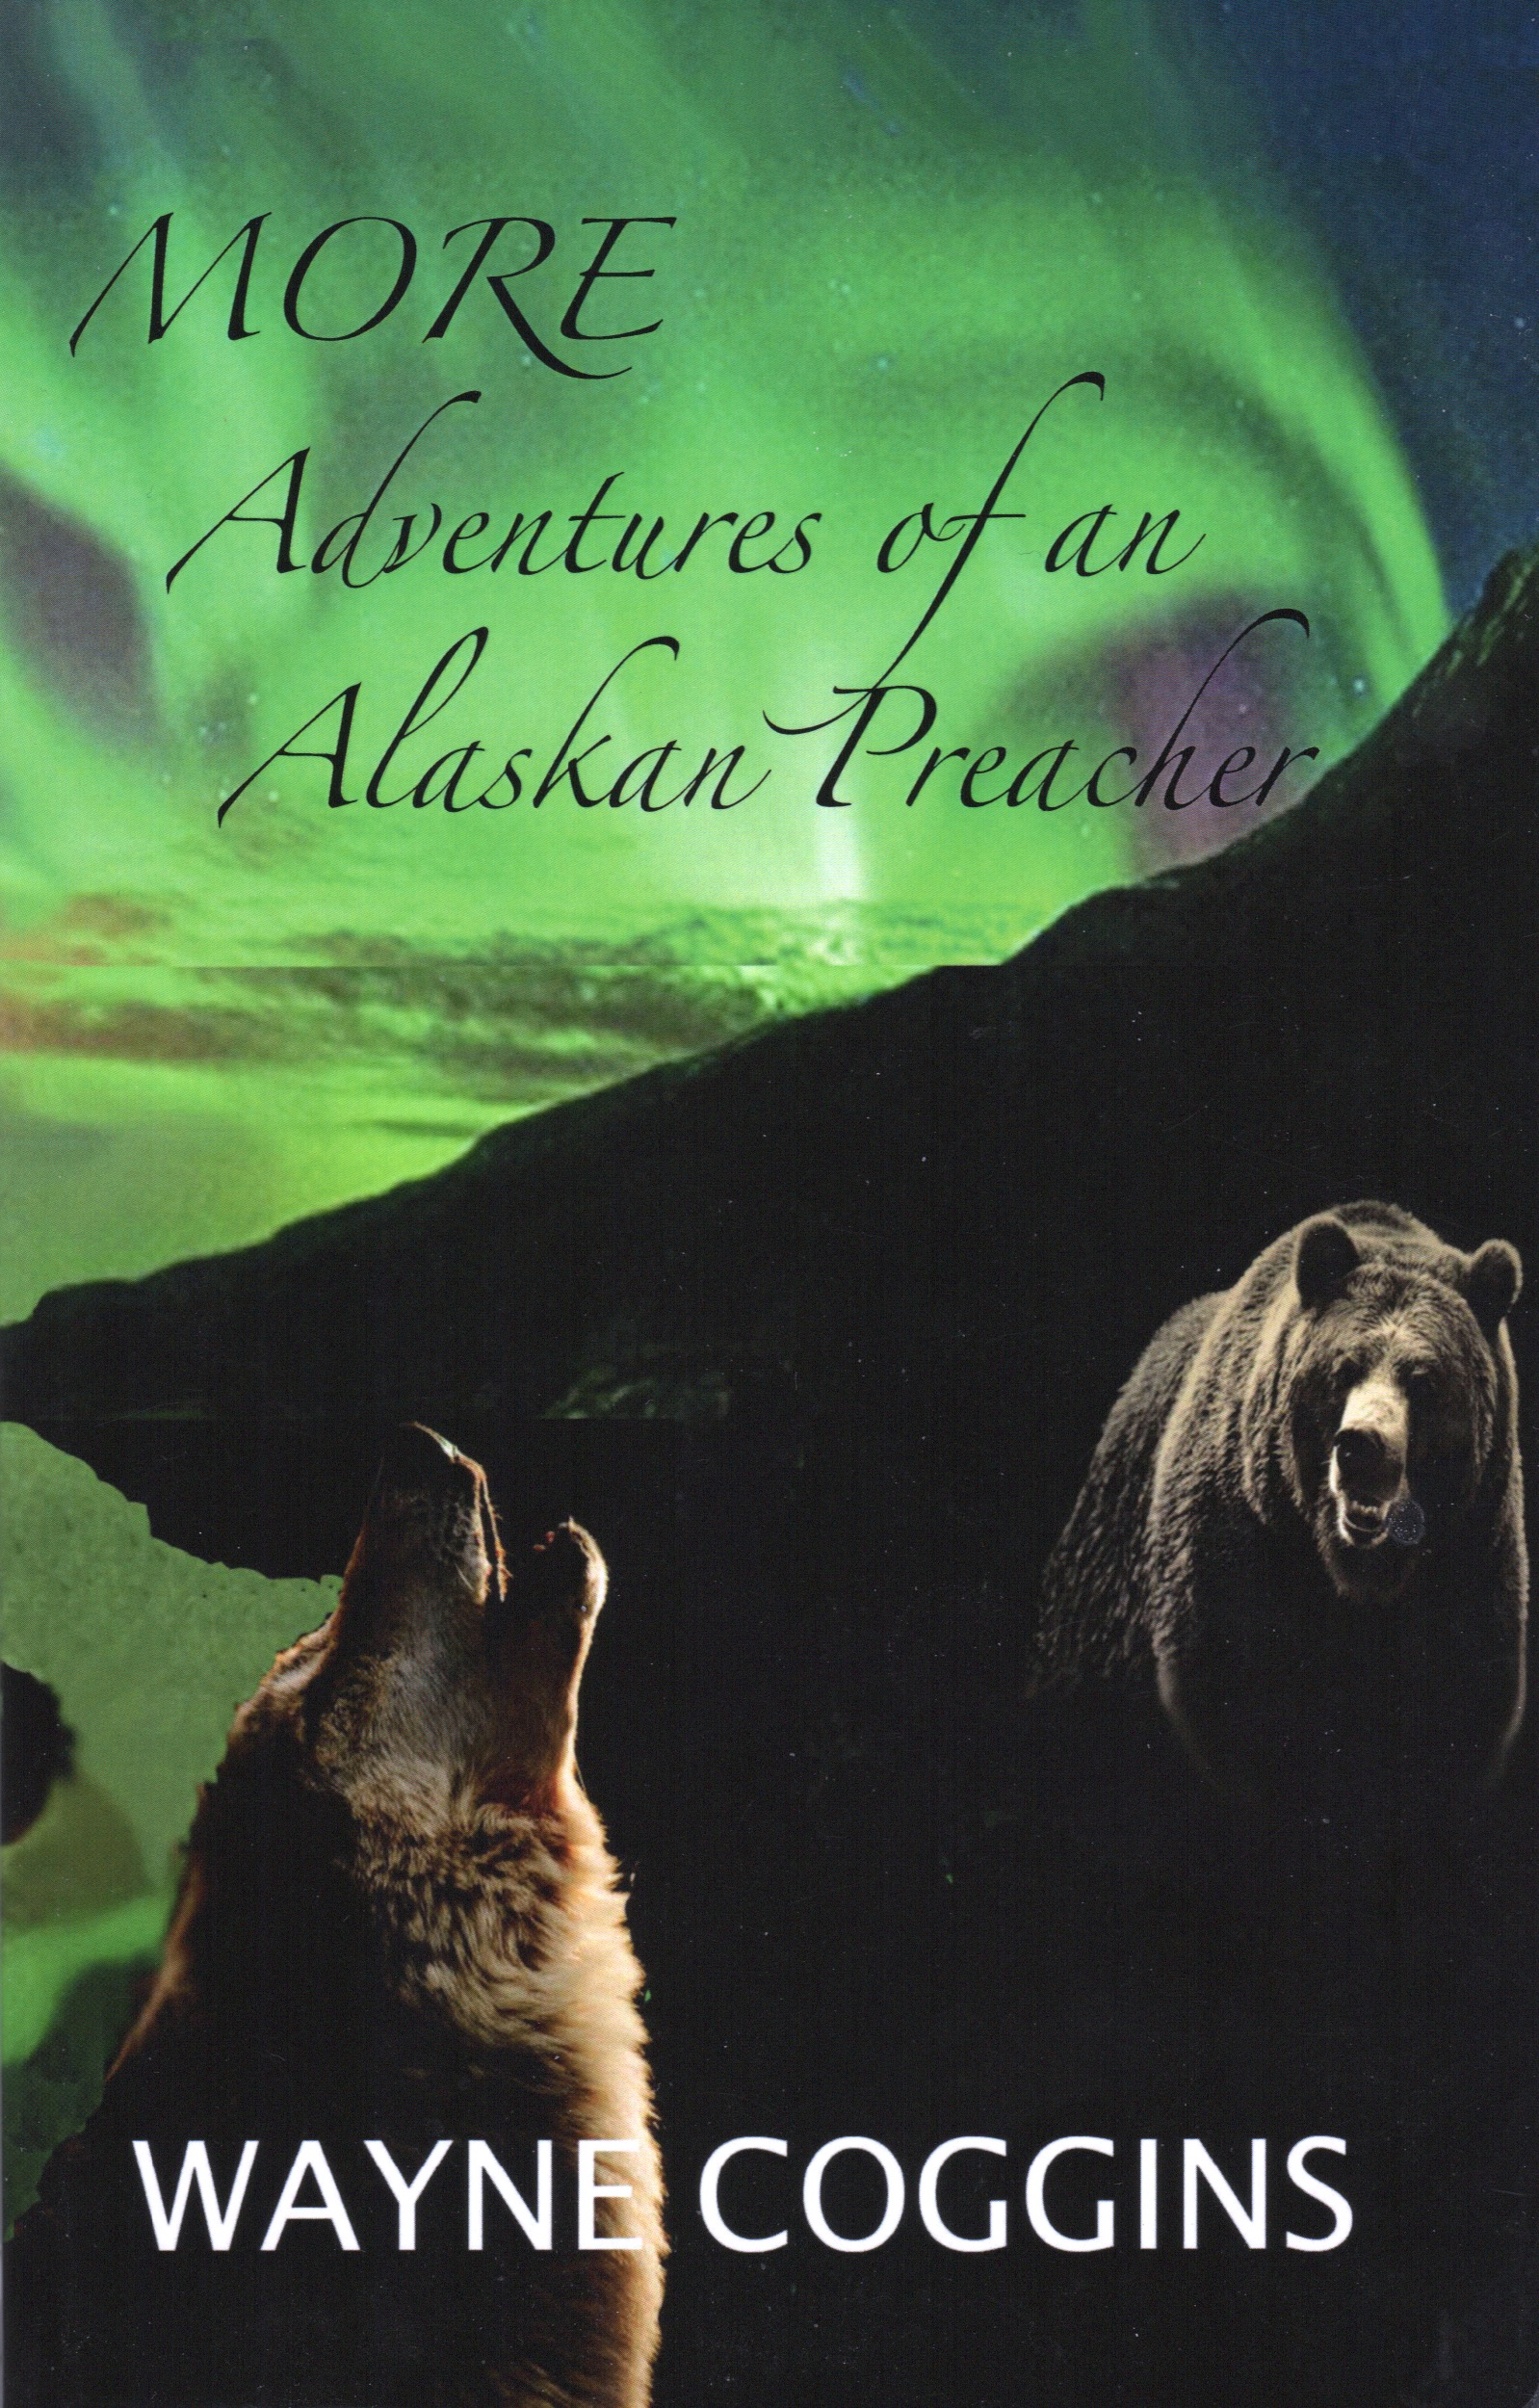 Wayne's Book, Adventures of an Alaskan Preacher